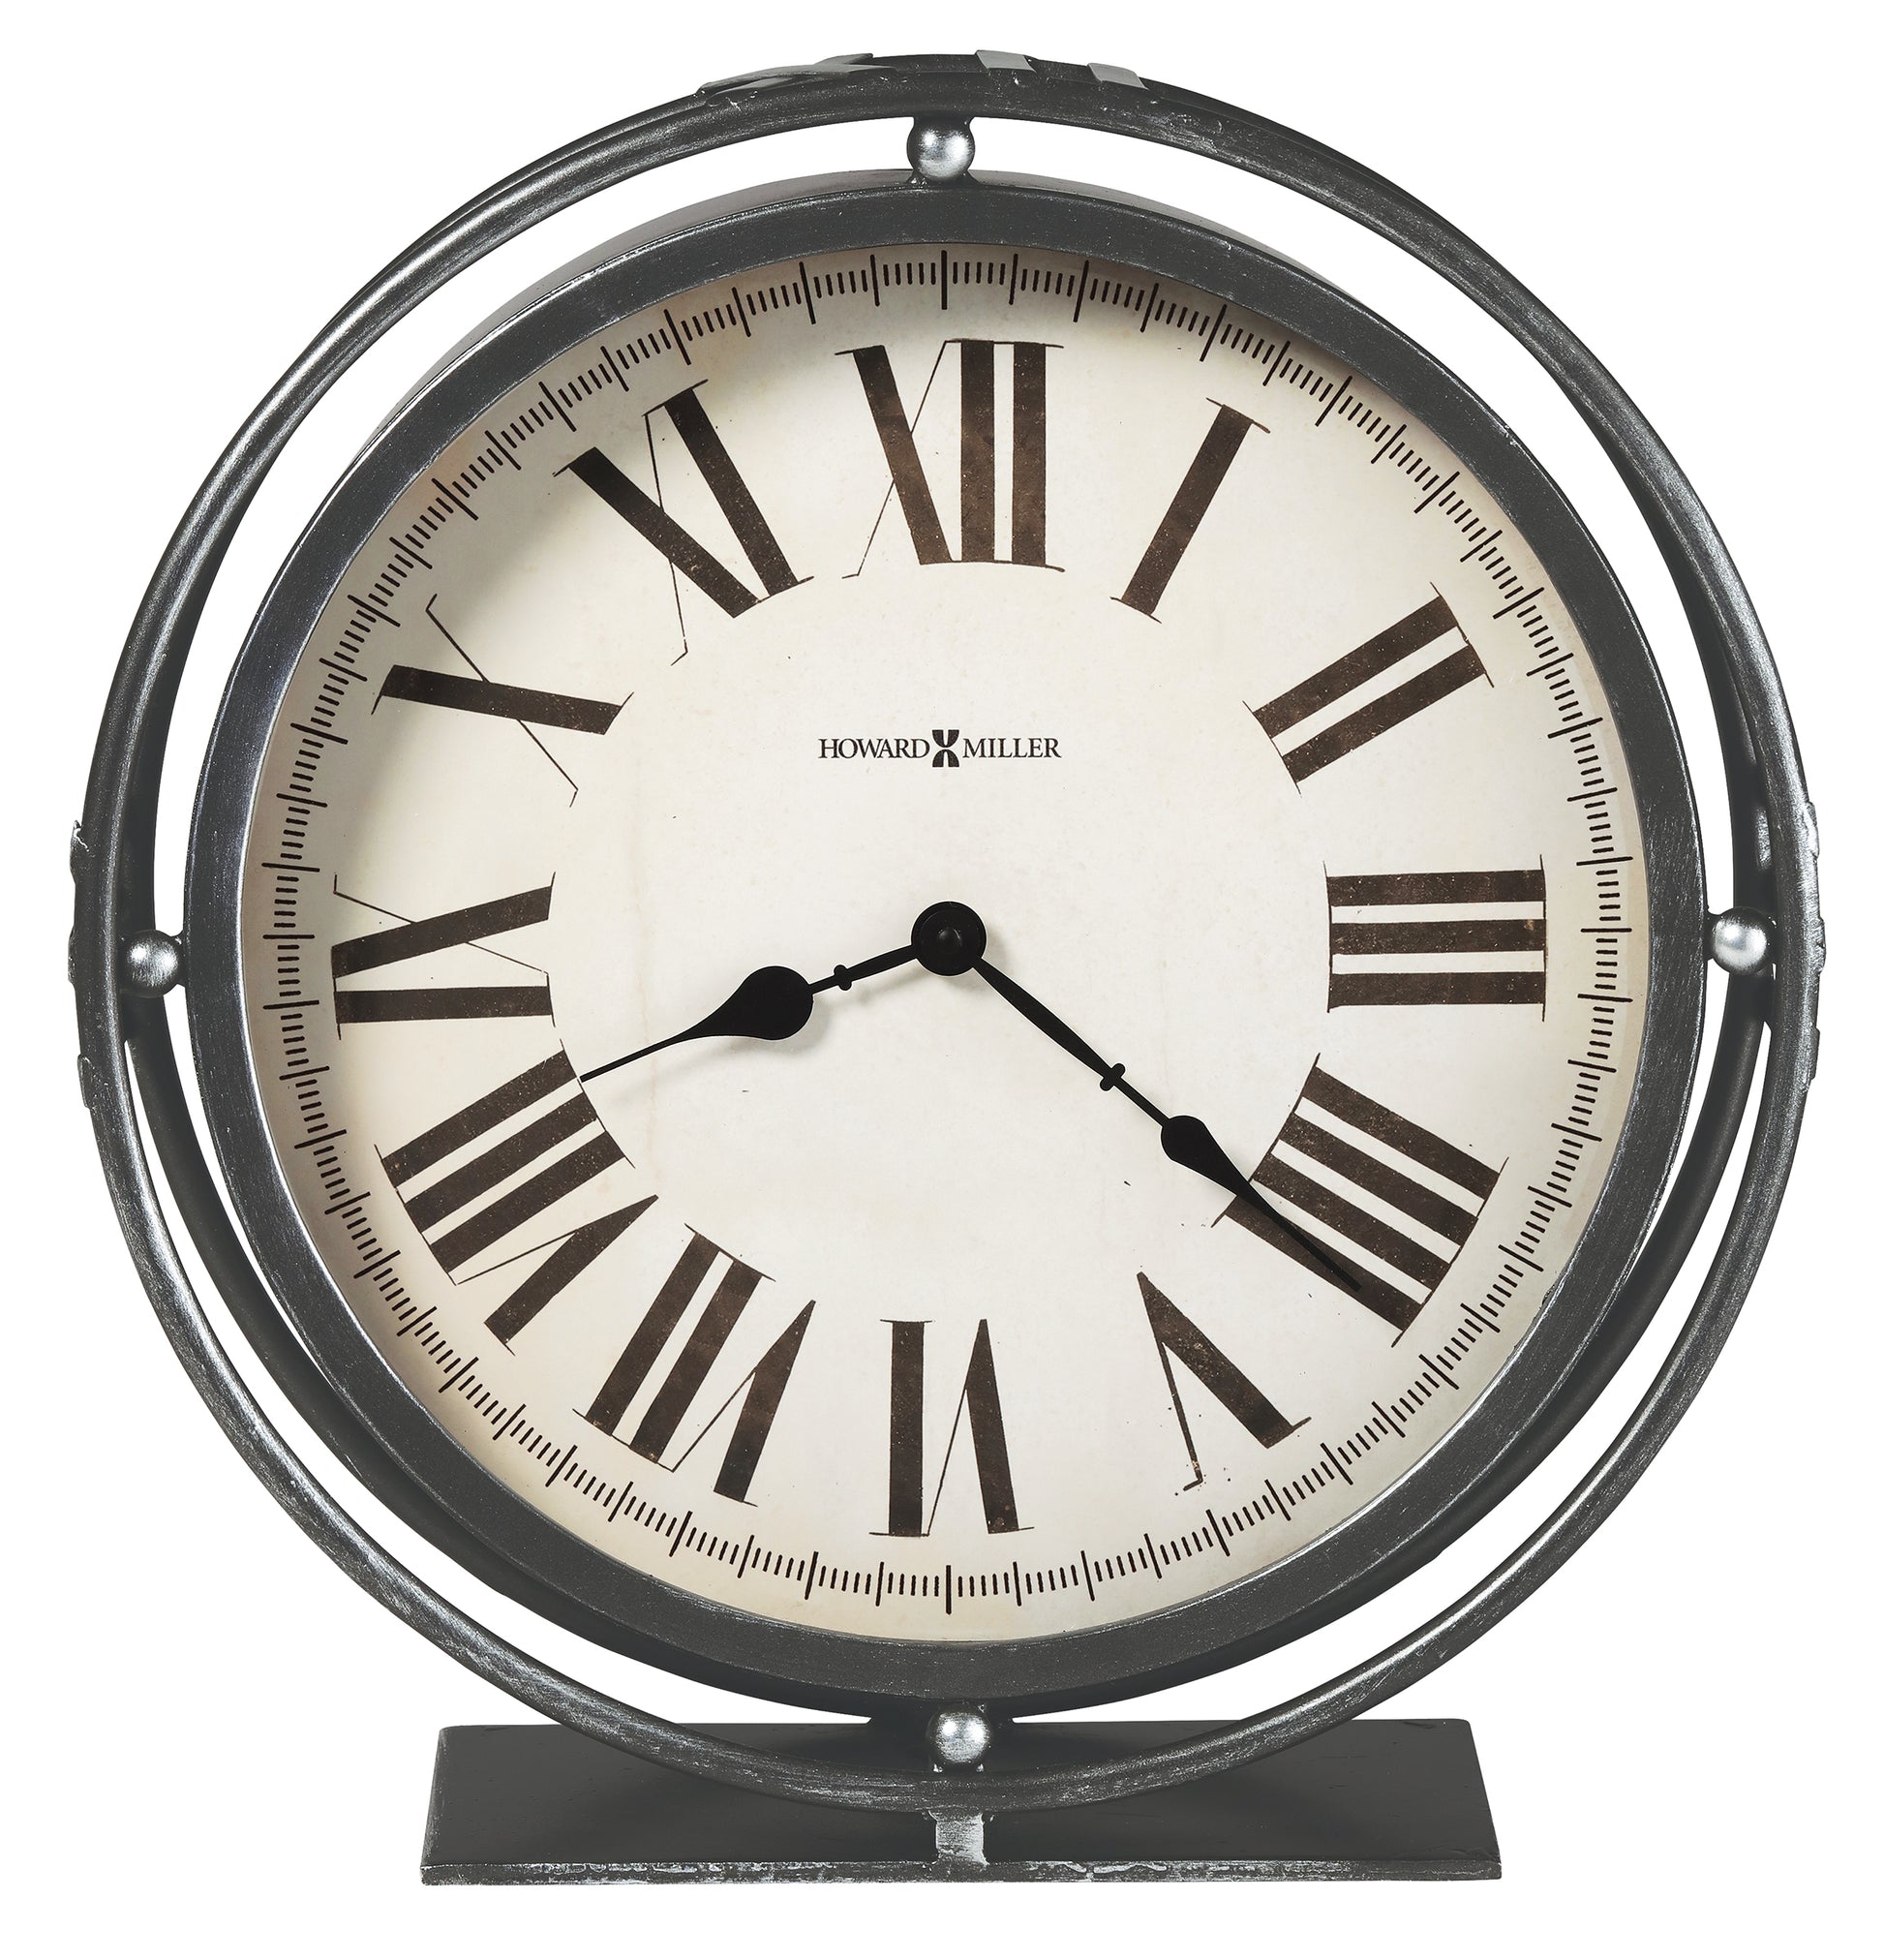 HOWARD MILLER KEISHA MANTEL CLOCK 635225 - Grandfather Clocks